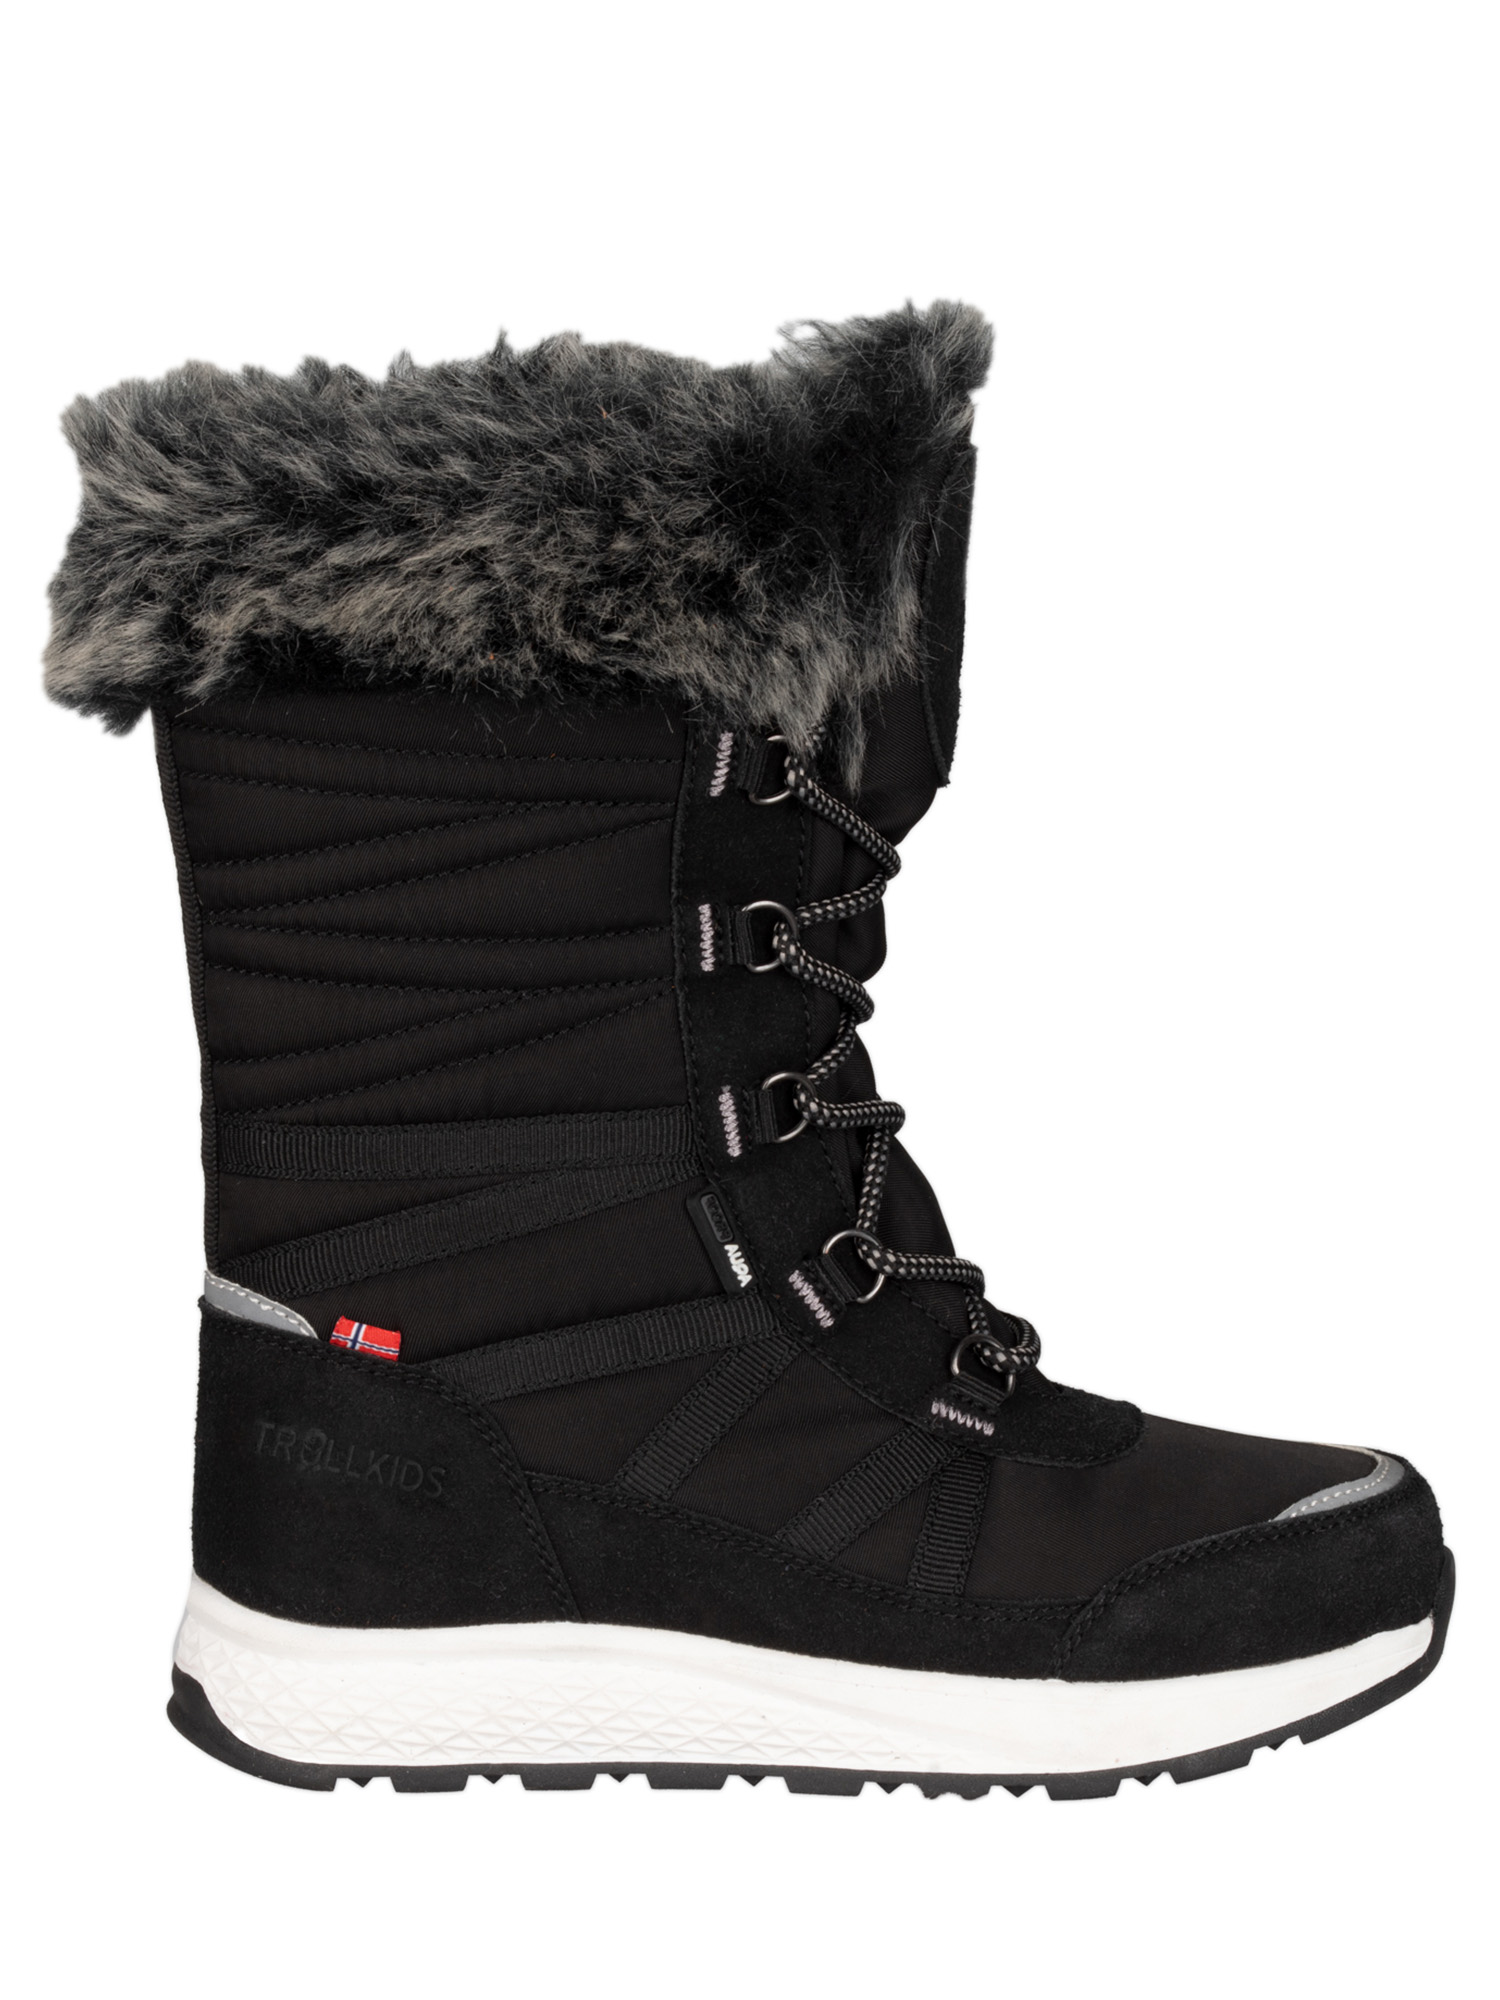 Ботинки Trollkids Girls Hemsedal Winter Boots Xt, черный, 34